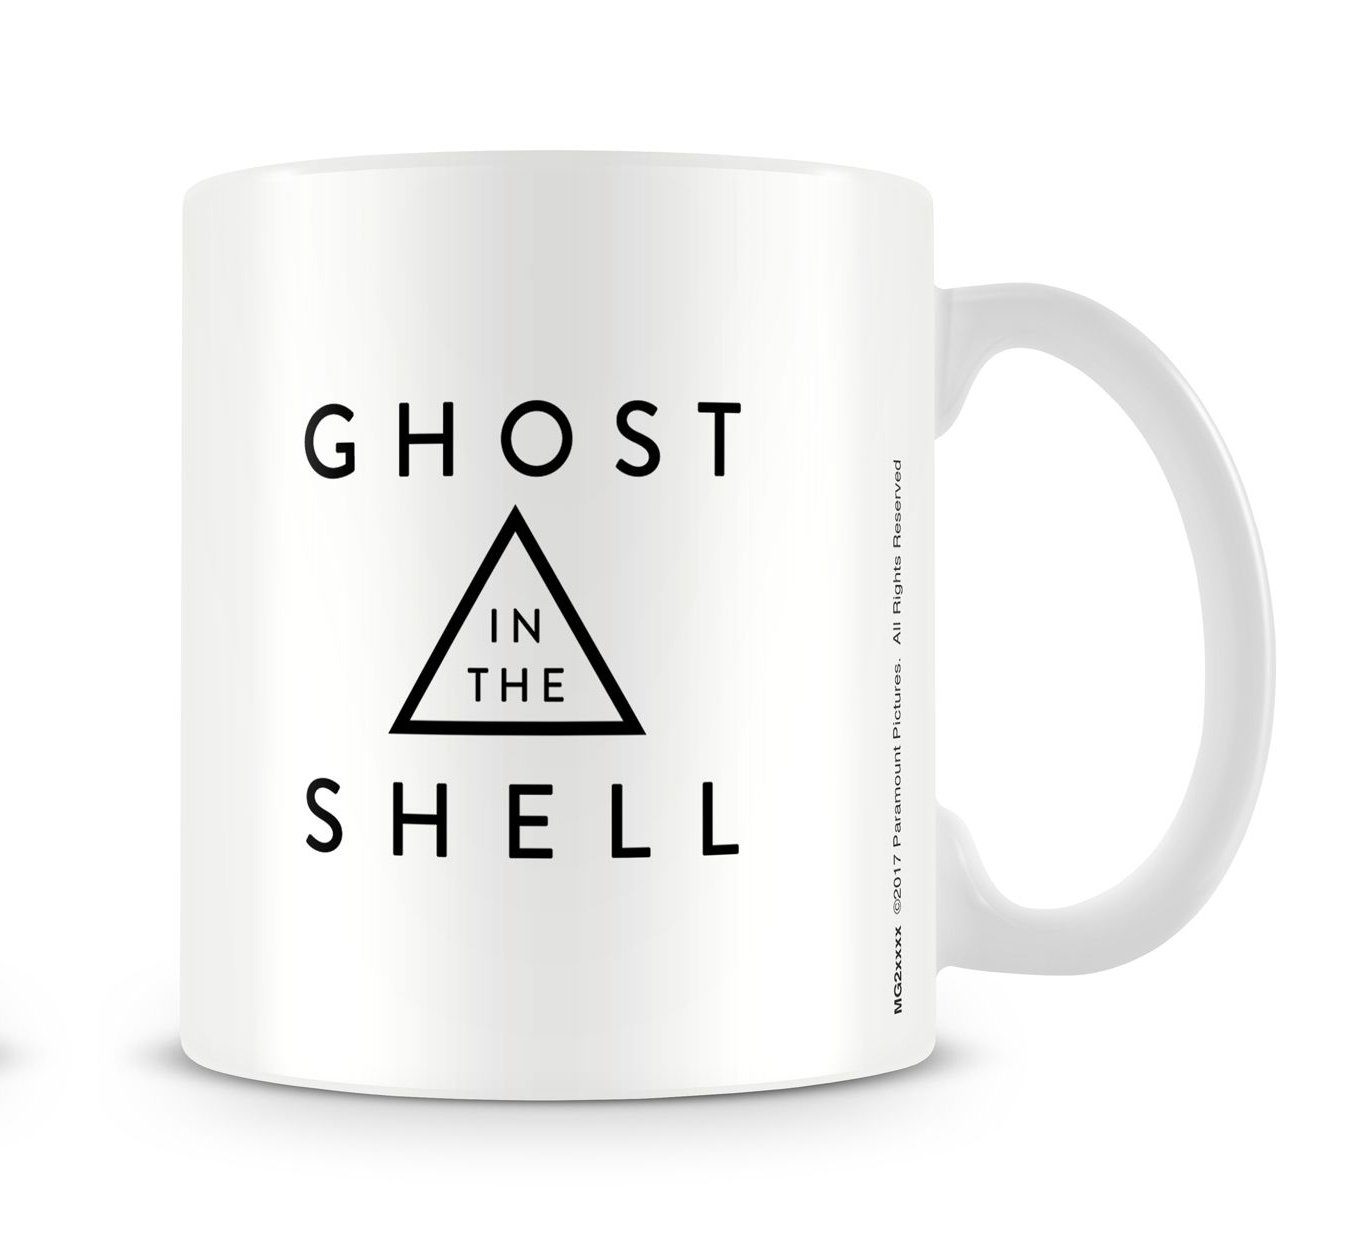 100% Shell Ghost Keramik the PYRAMID Tasse in Tasse Logo,